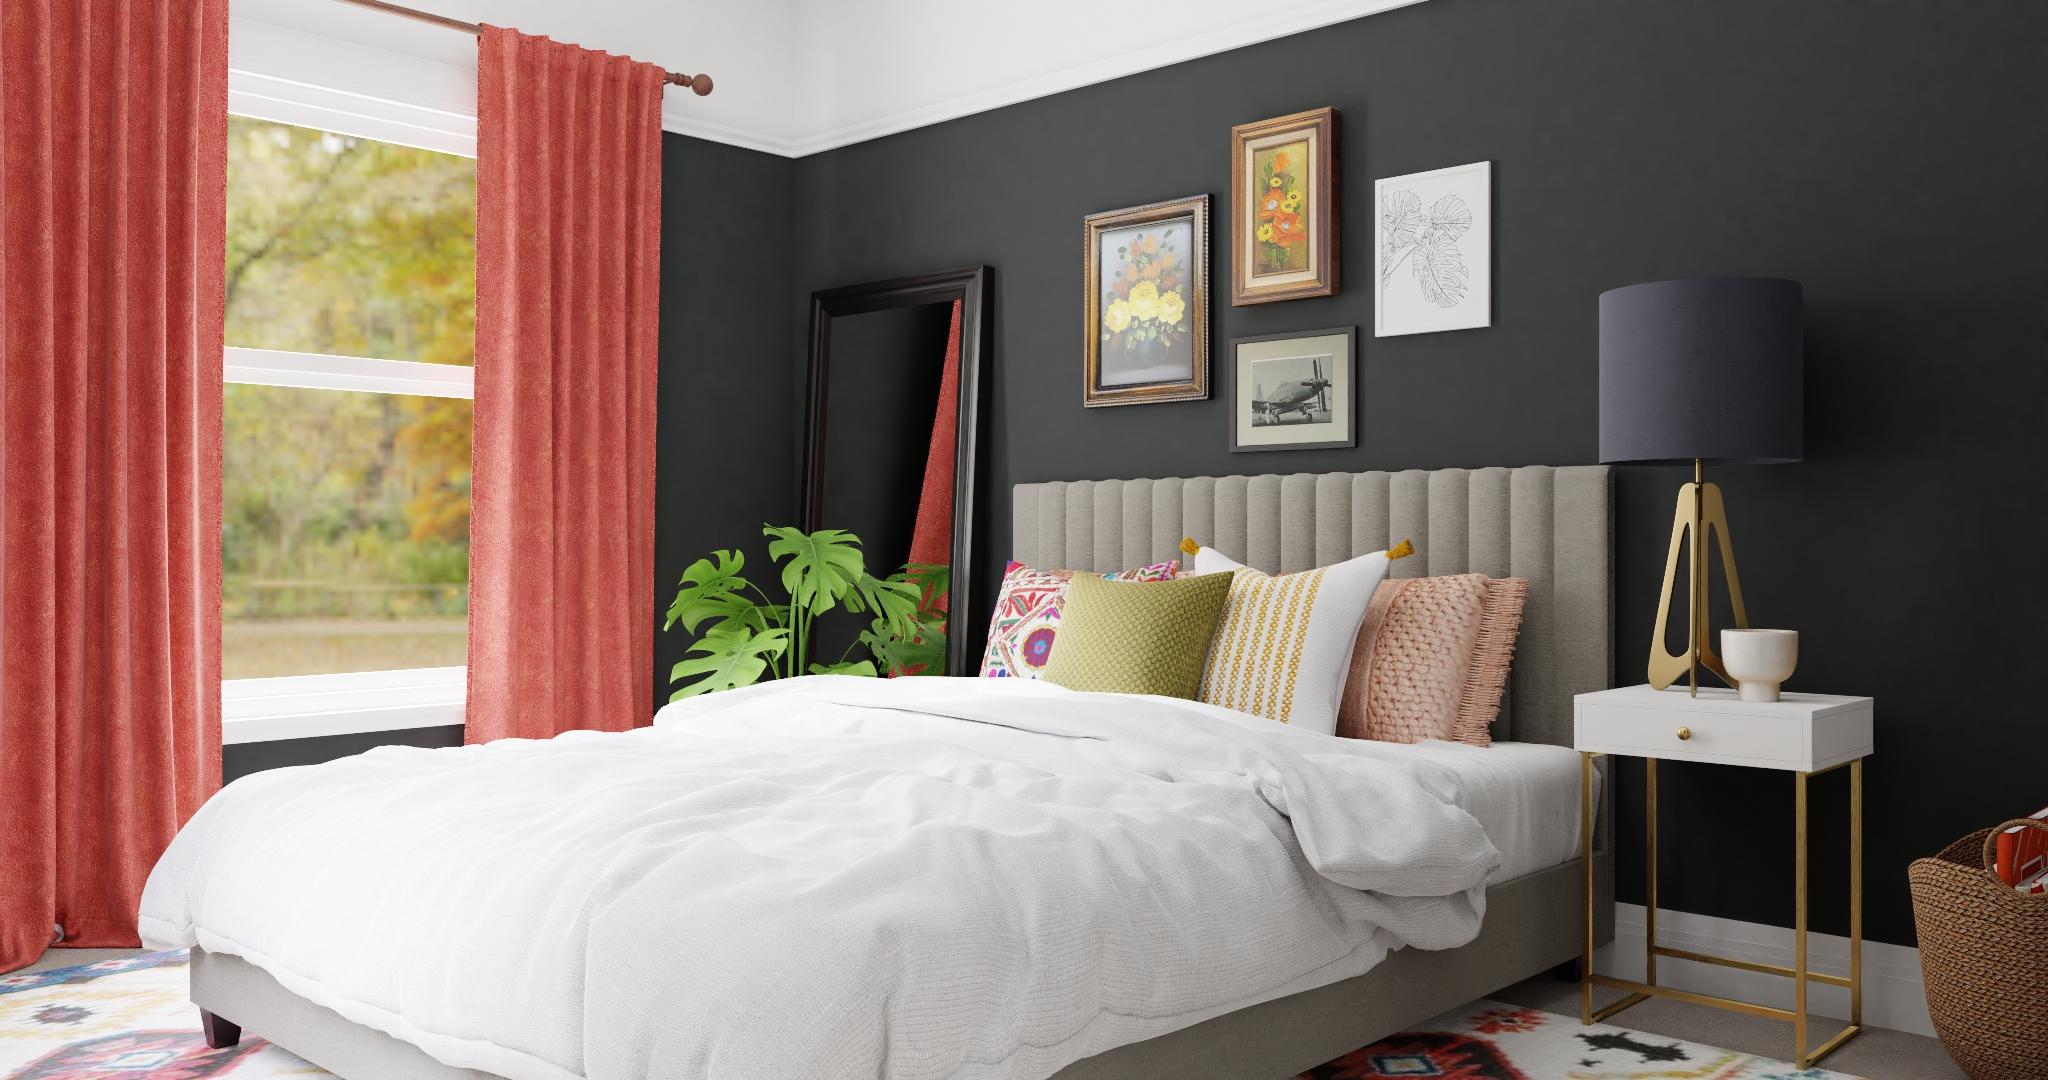 Black & Grapefruit: Eclectic Transitional Bedroom